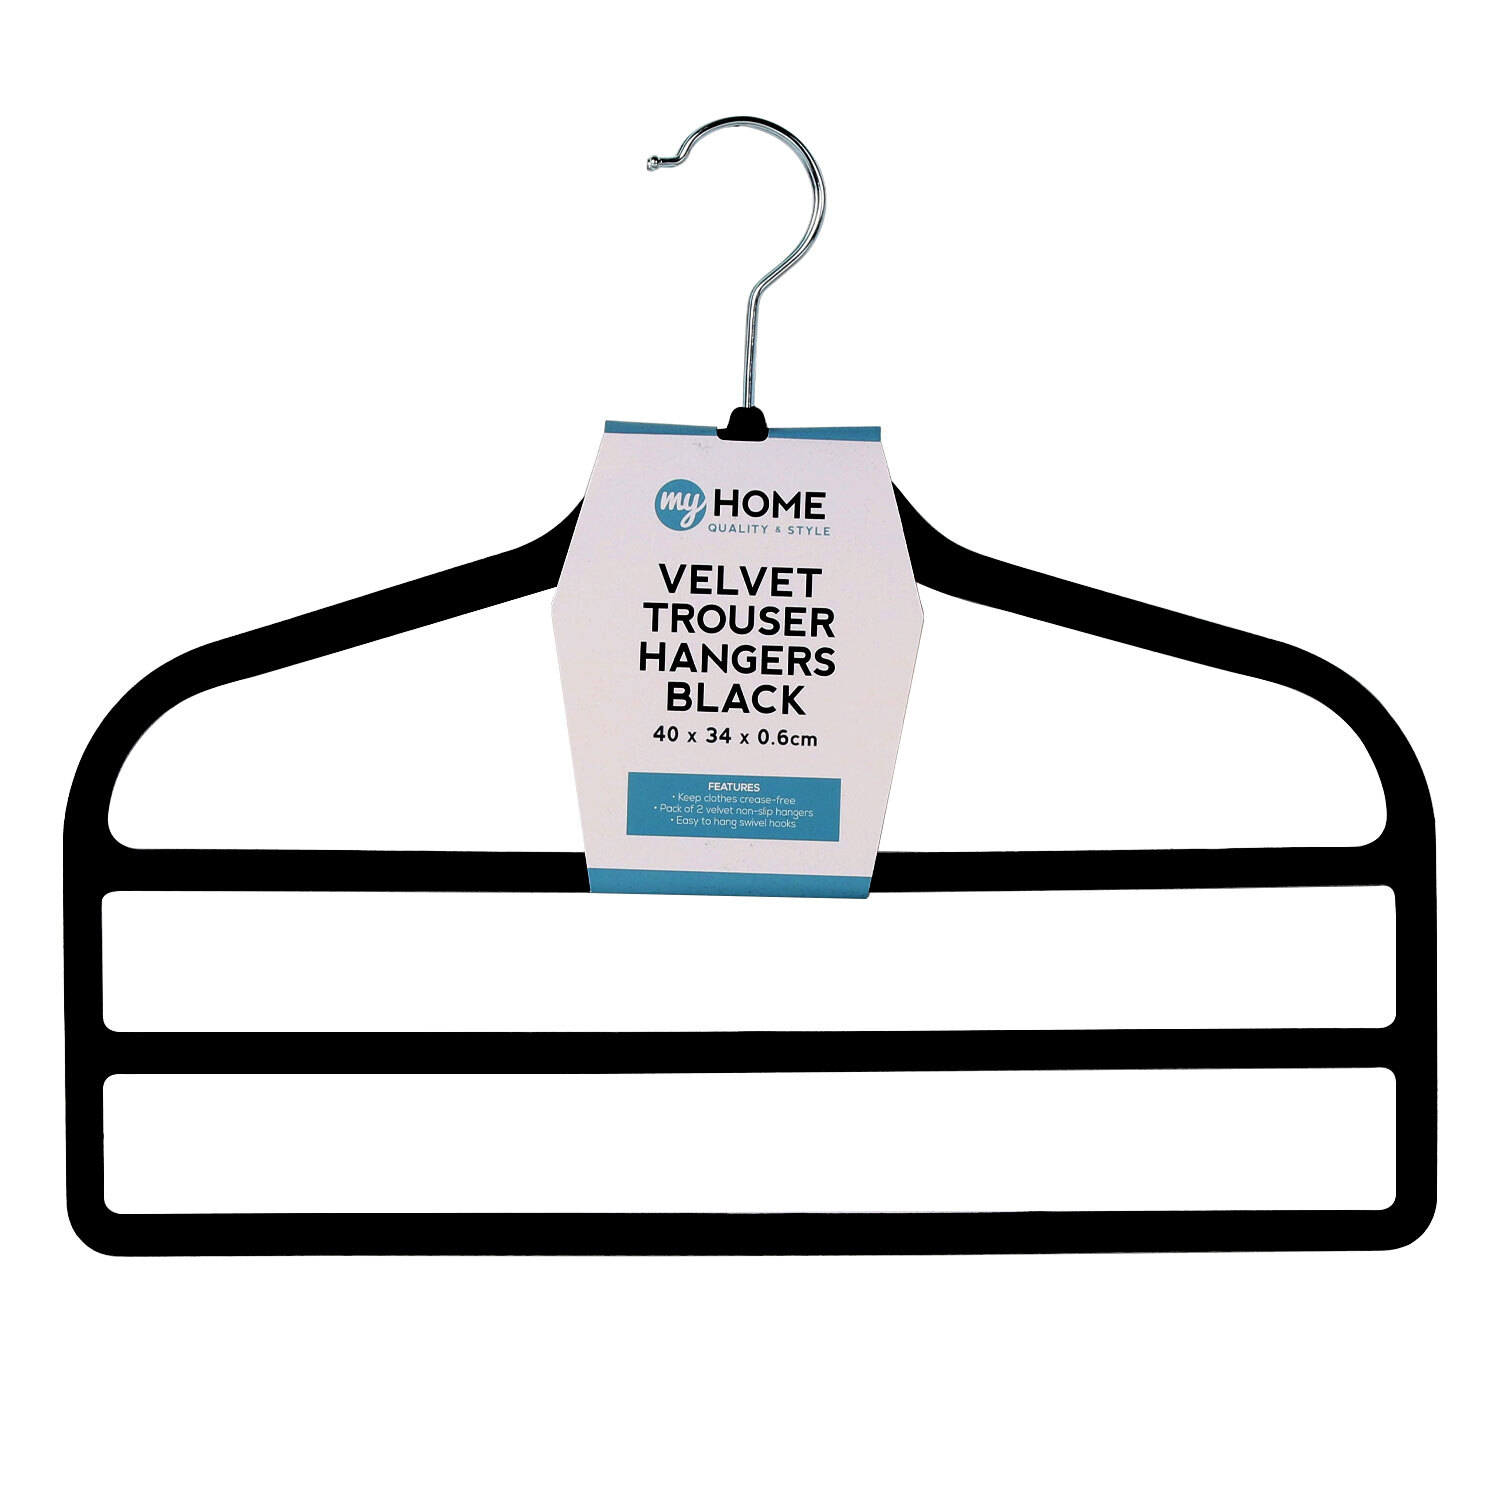 My Home Black Velvet Clothes Hanger 2 Pack Image